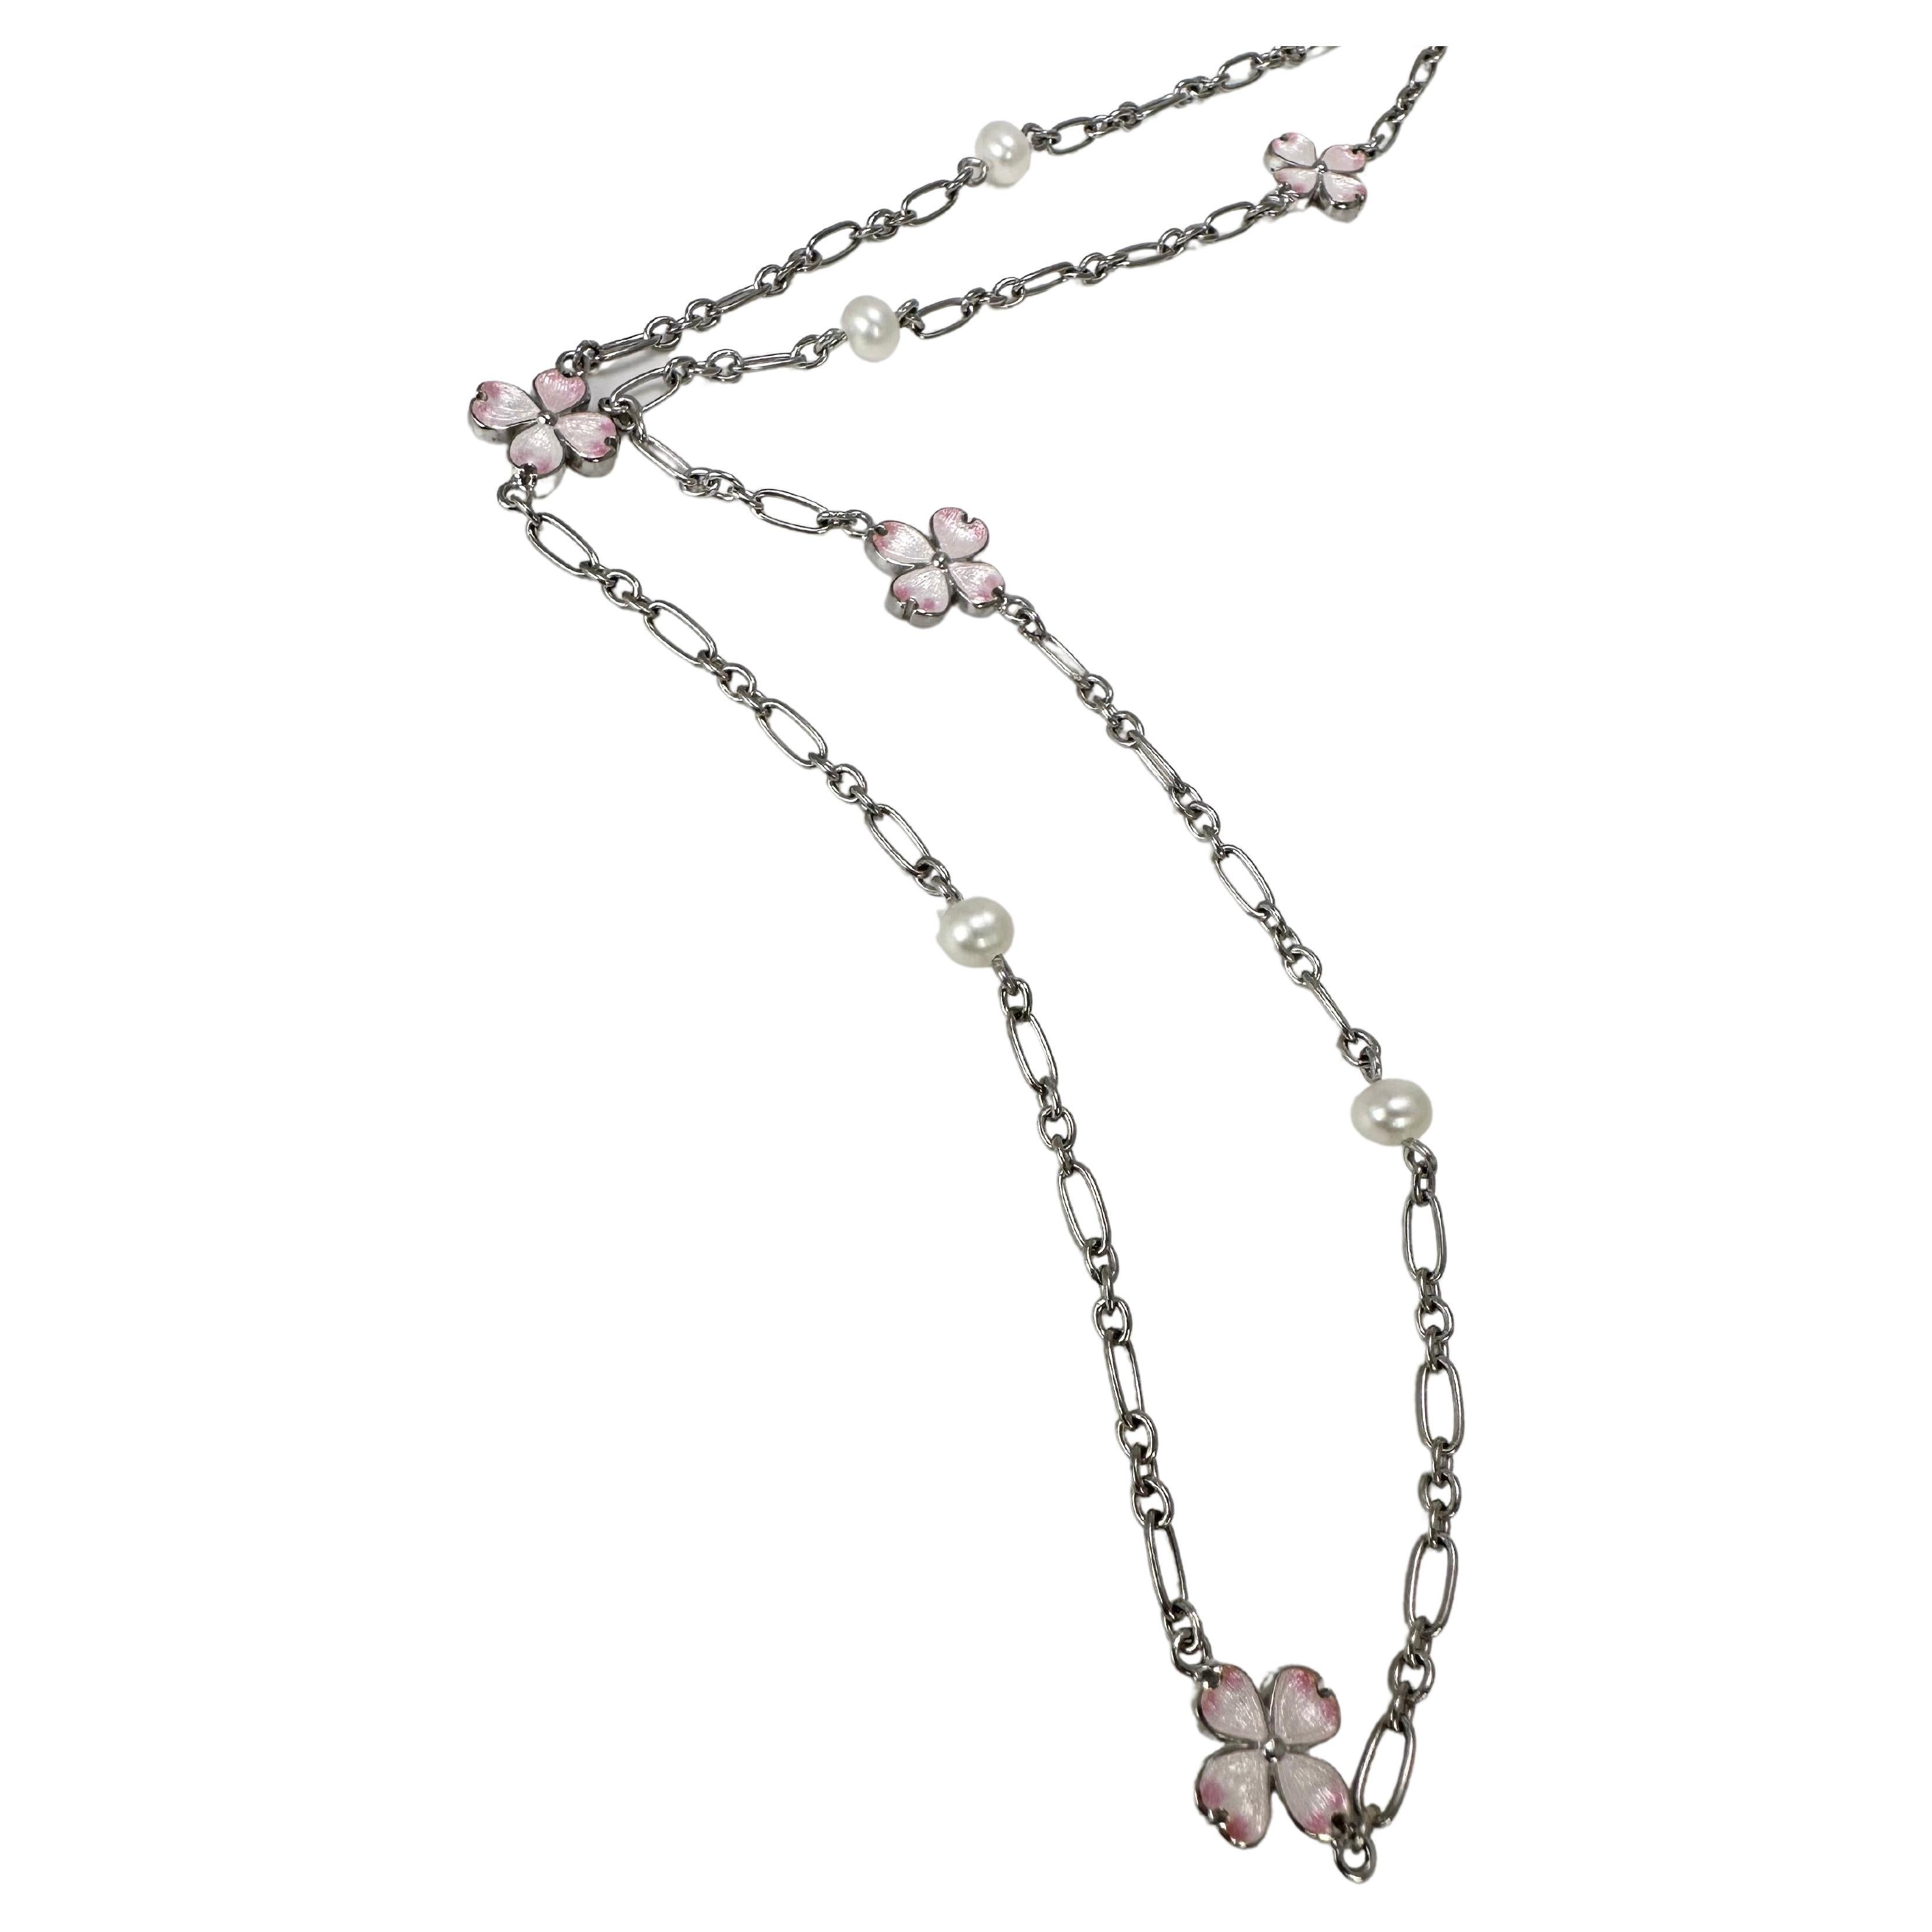 Enamel long chain necklace 925 silver chain 